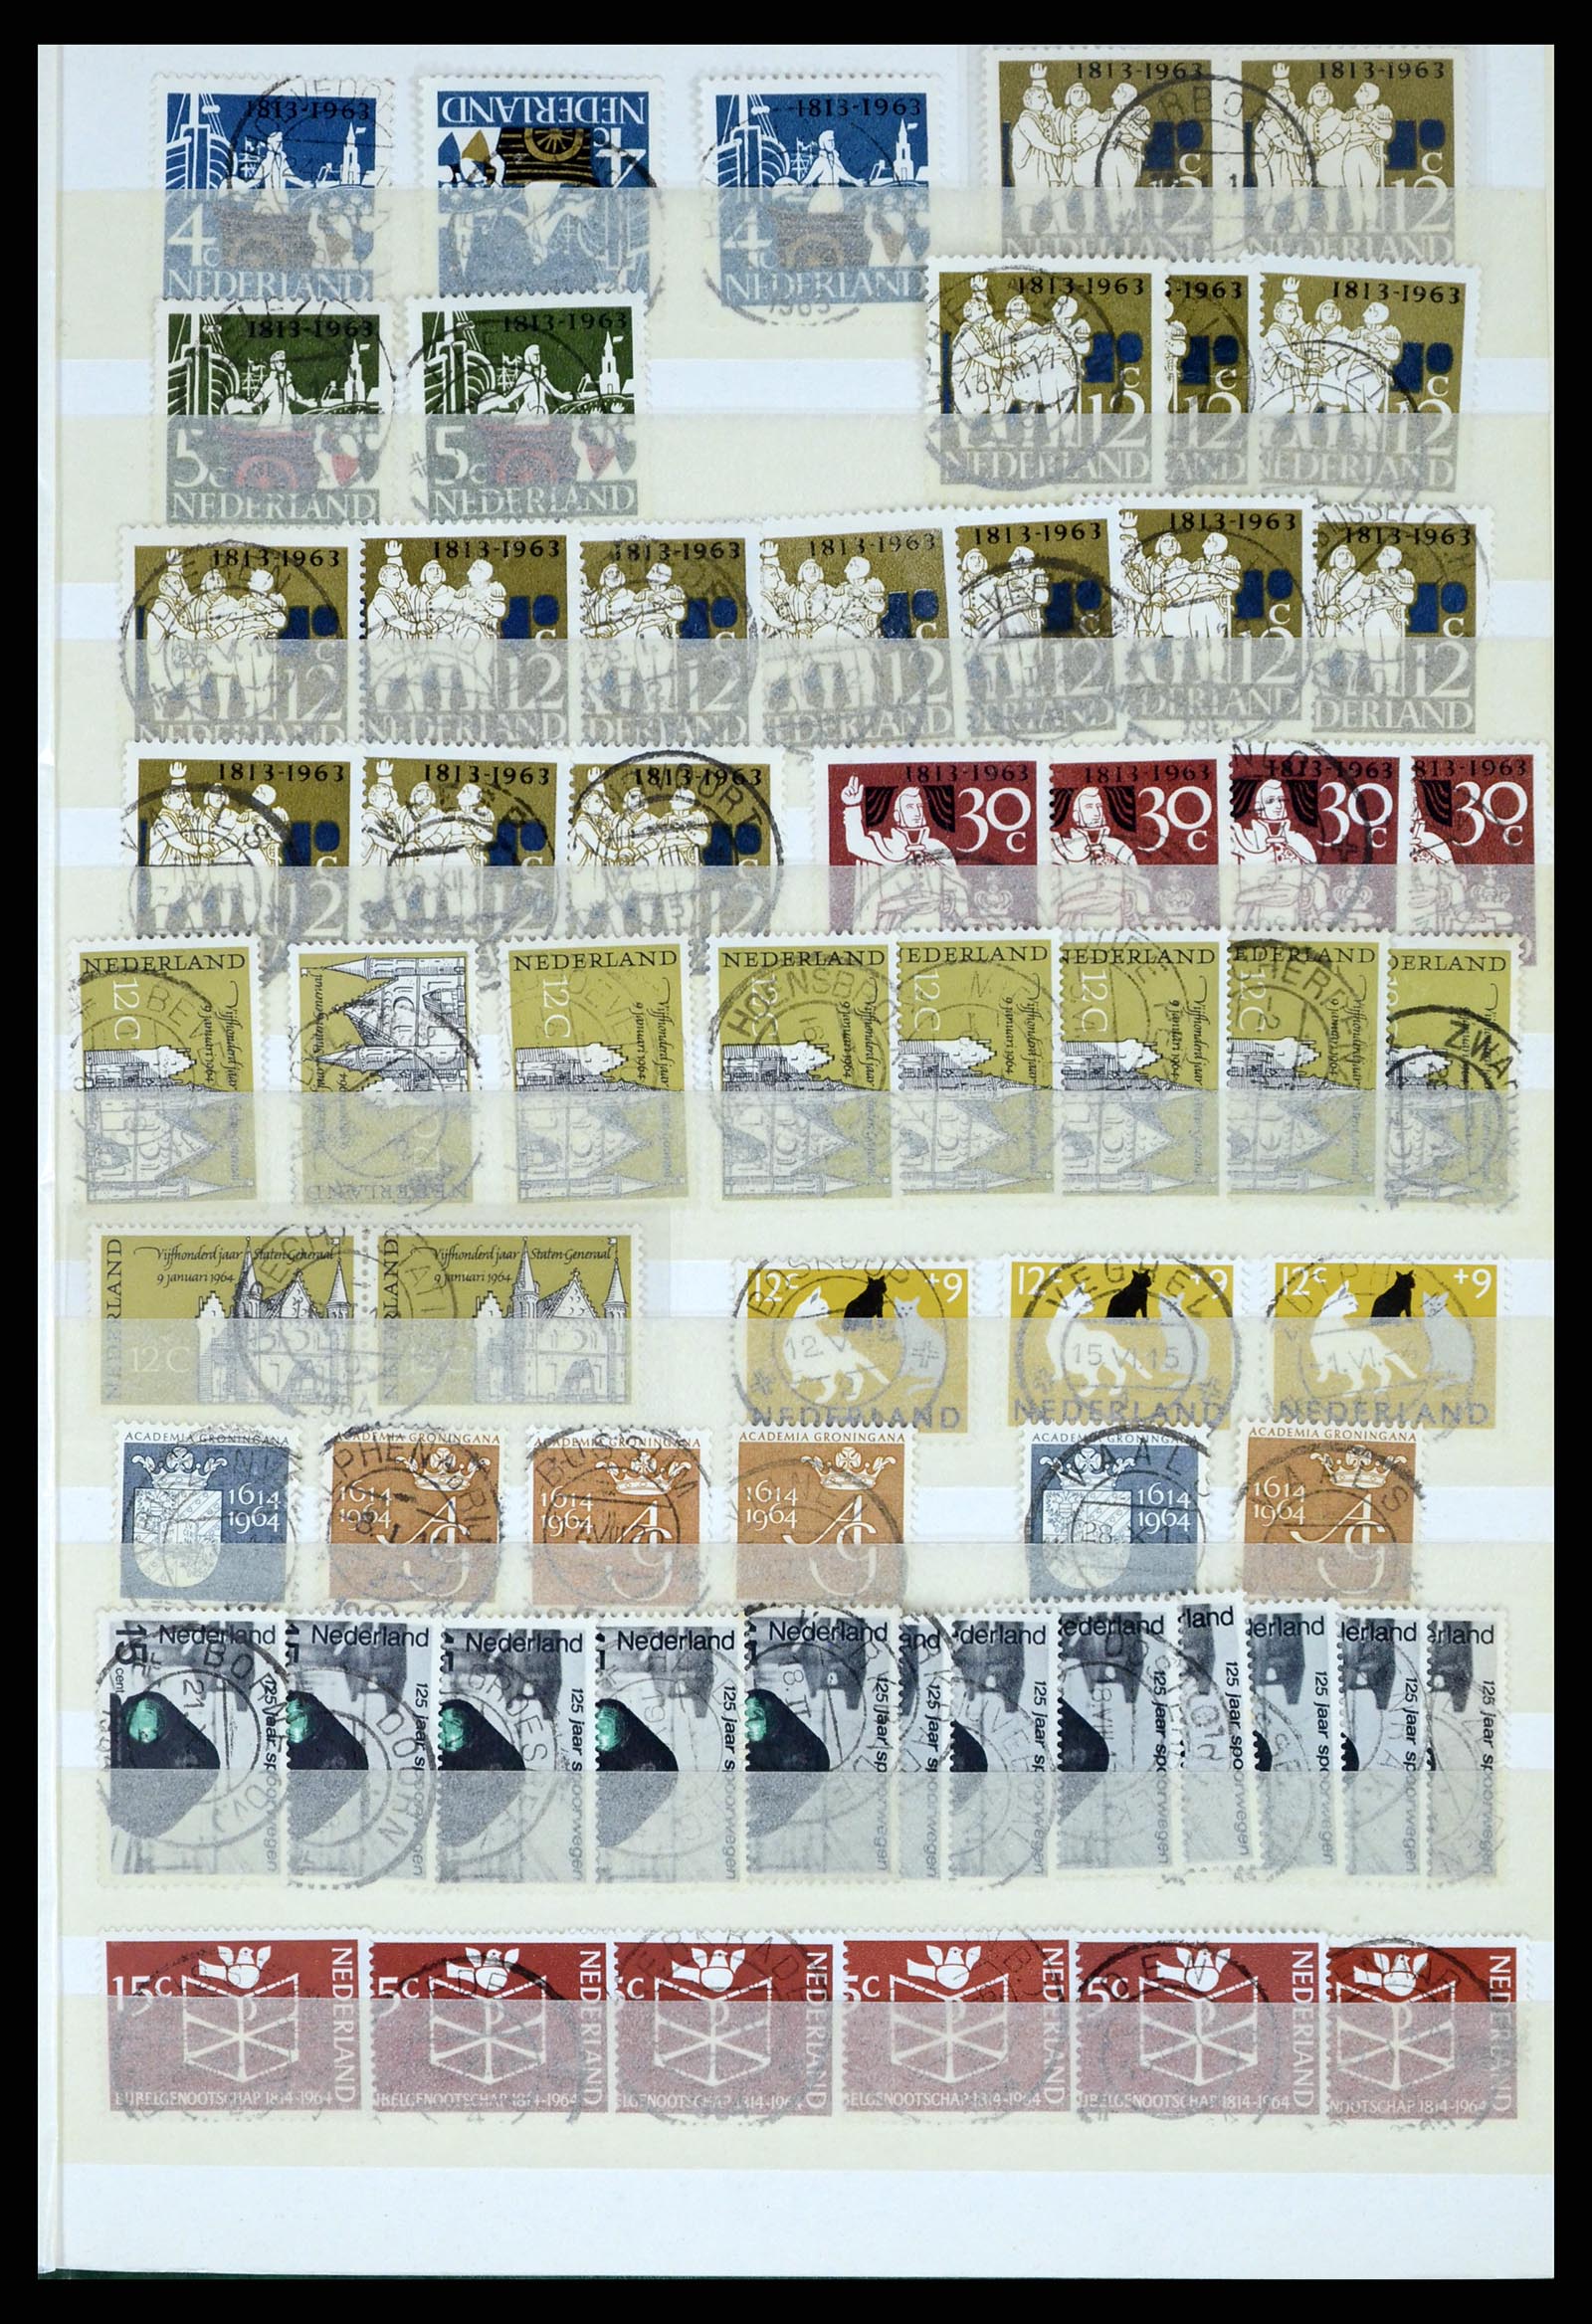 37424 057 - Stamp collection 37424 Netherlands shortbar cancels.